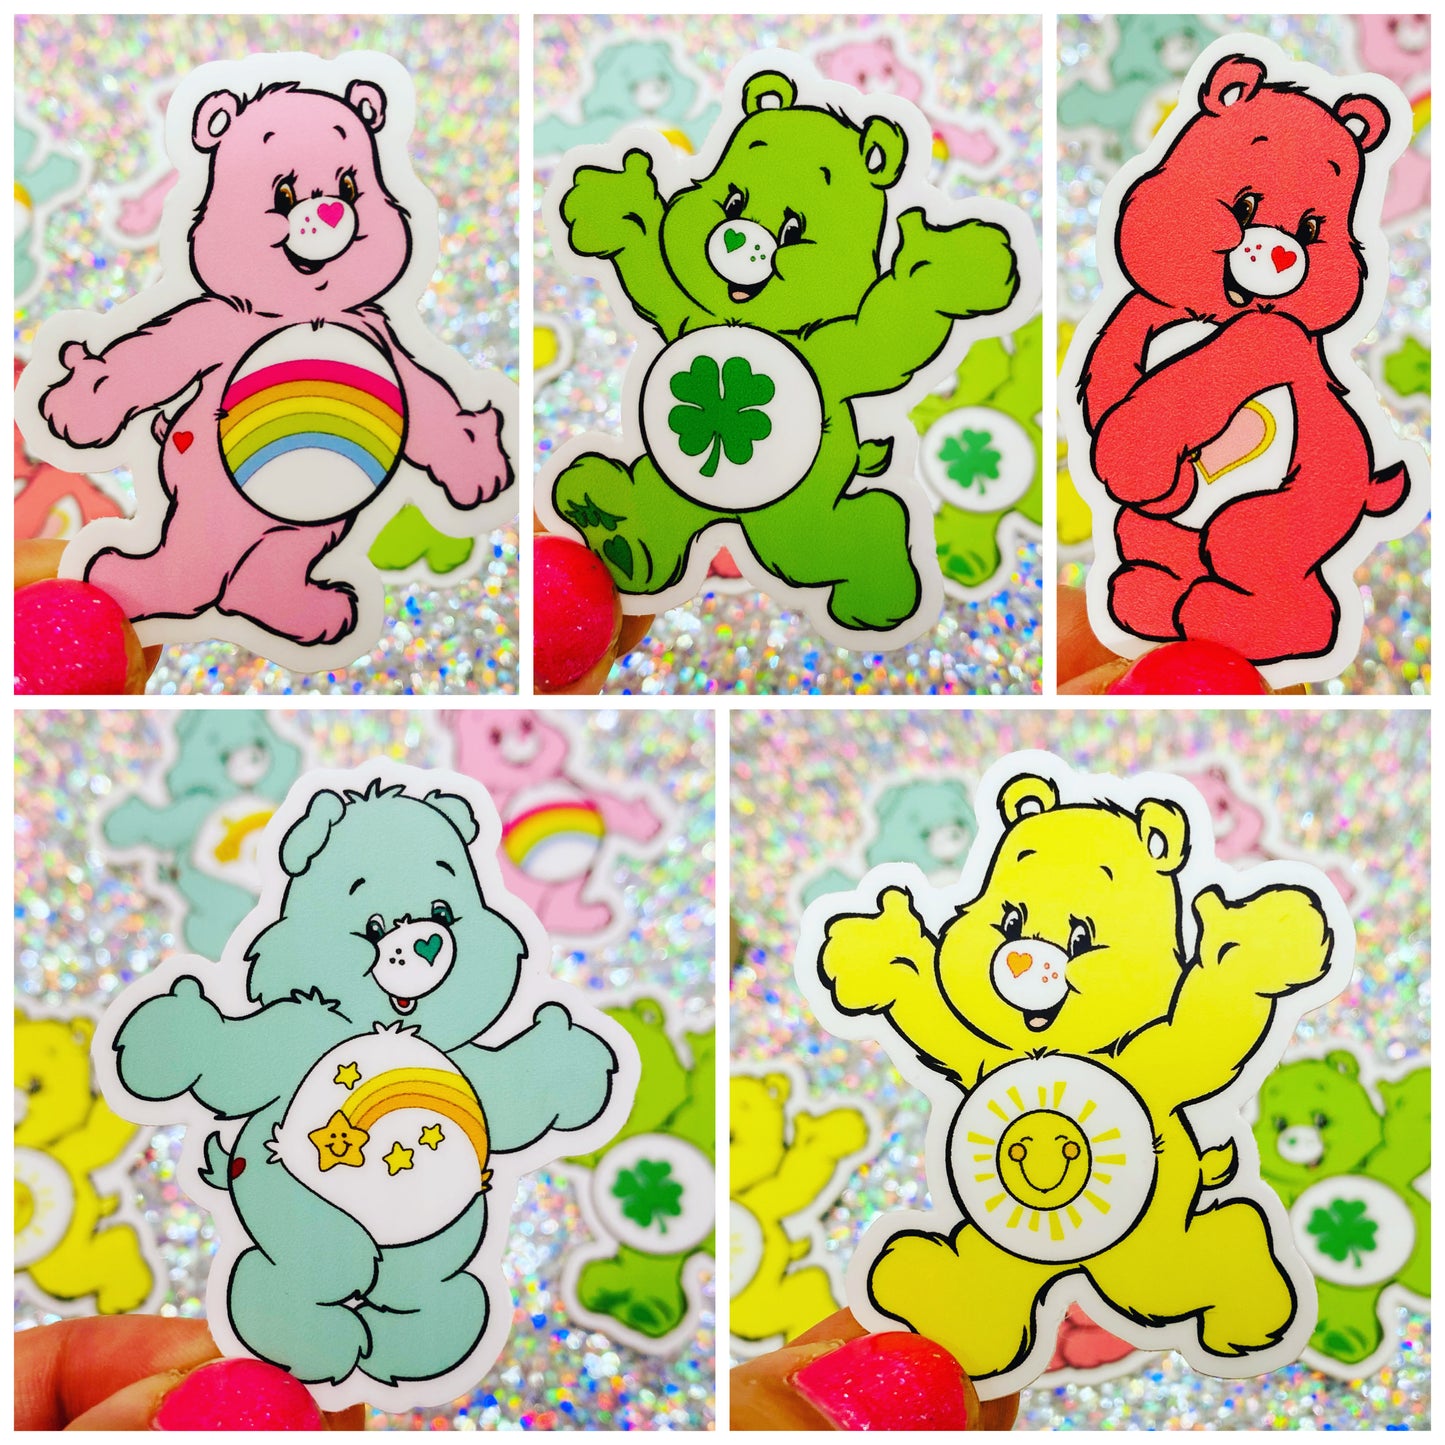 Birthday Bear Care Bear Sticker MINI 80s decal retro decal